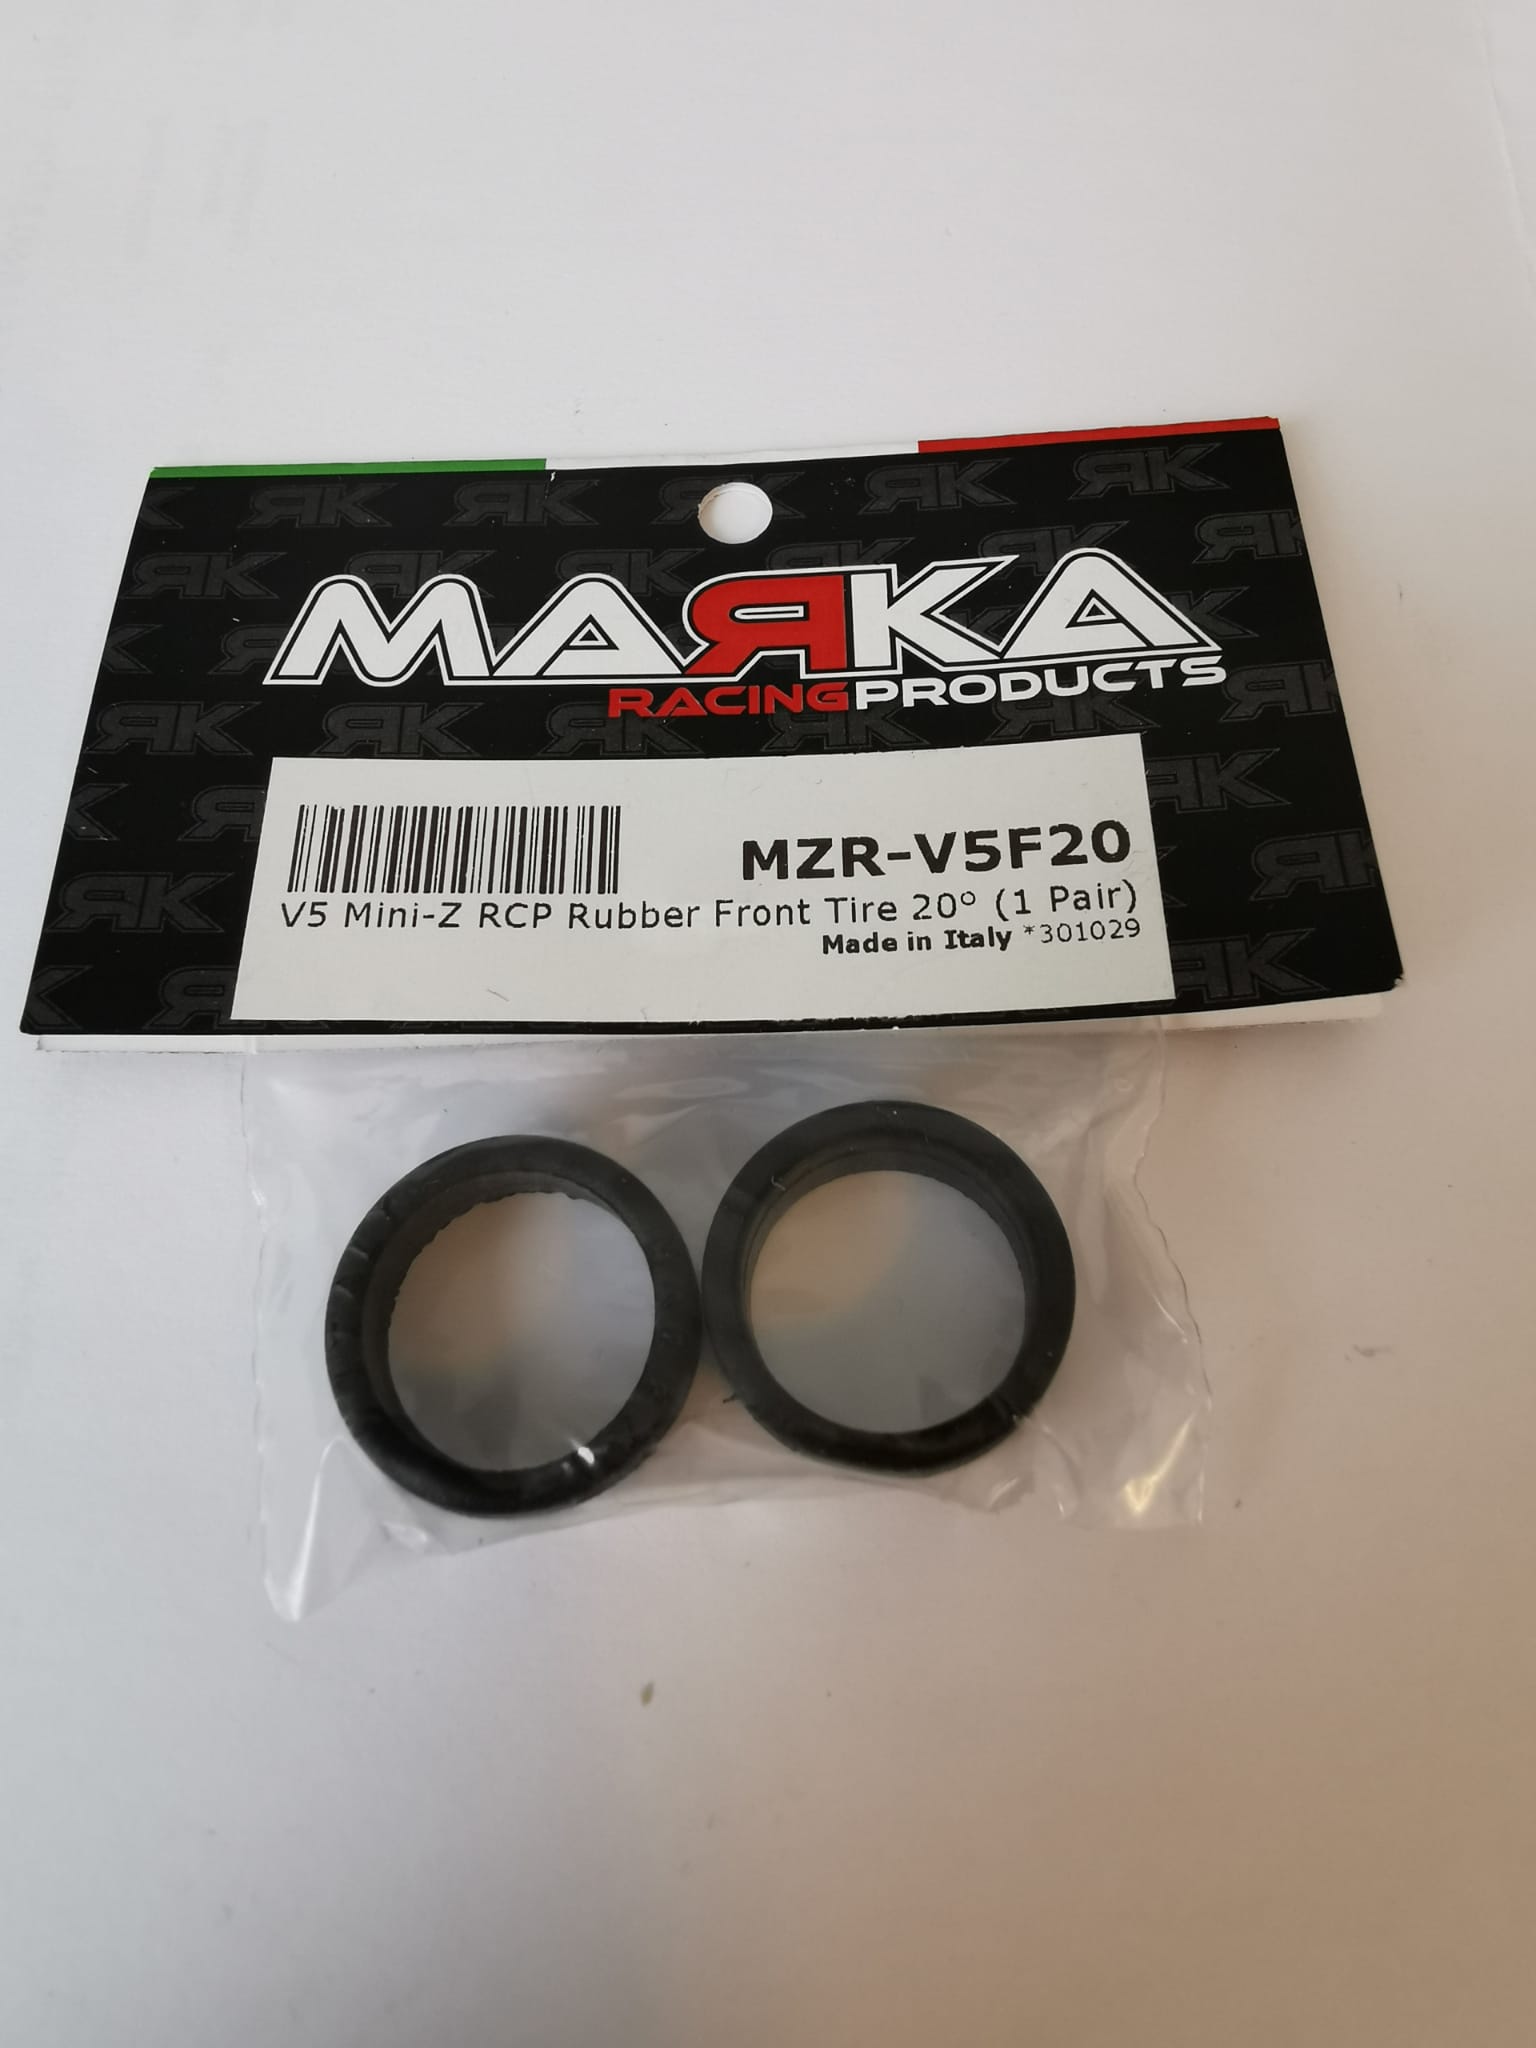 Marka V5 Mini-Z RCP Rubber Front Tire 20° (1 Pair) (MZR-V5F20)